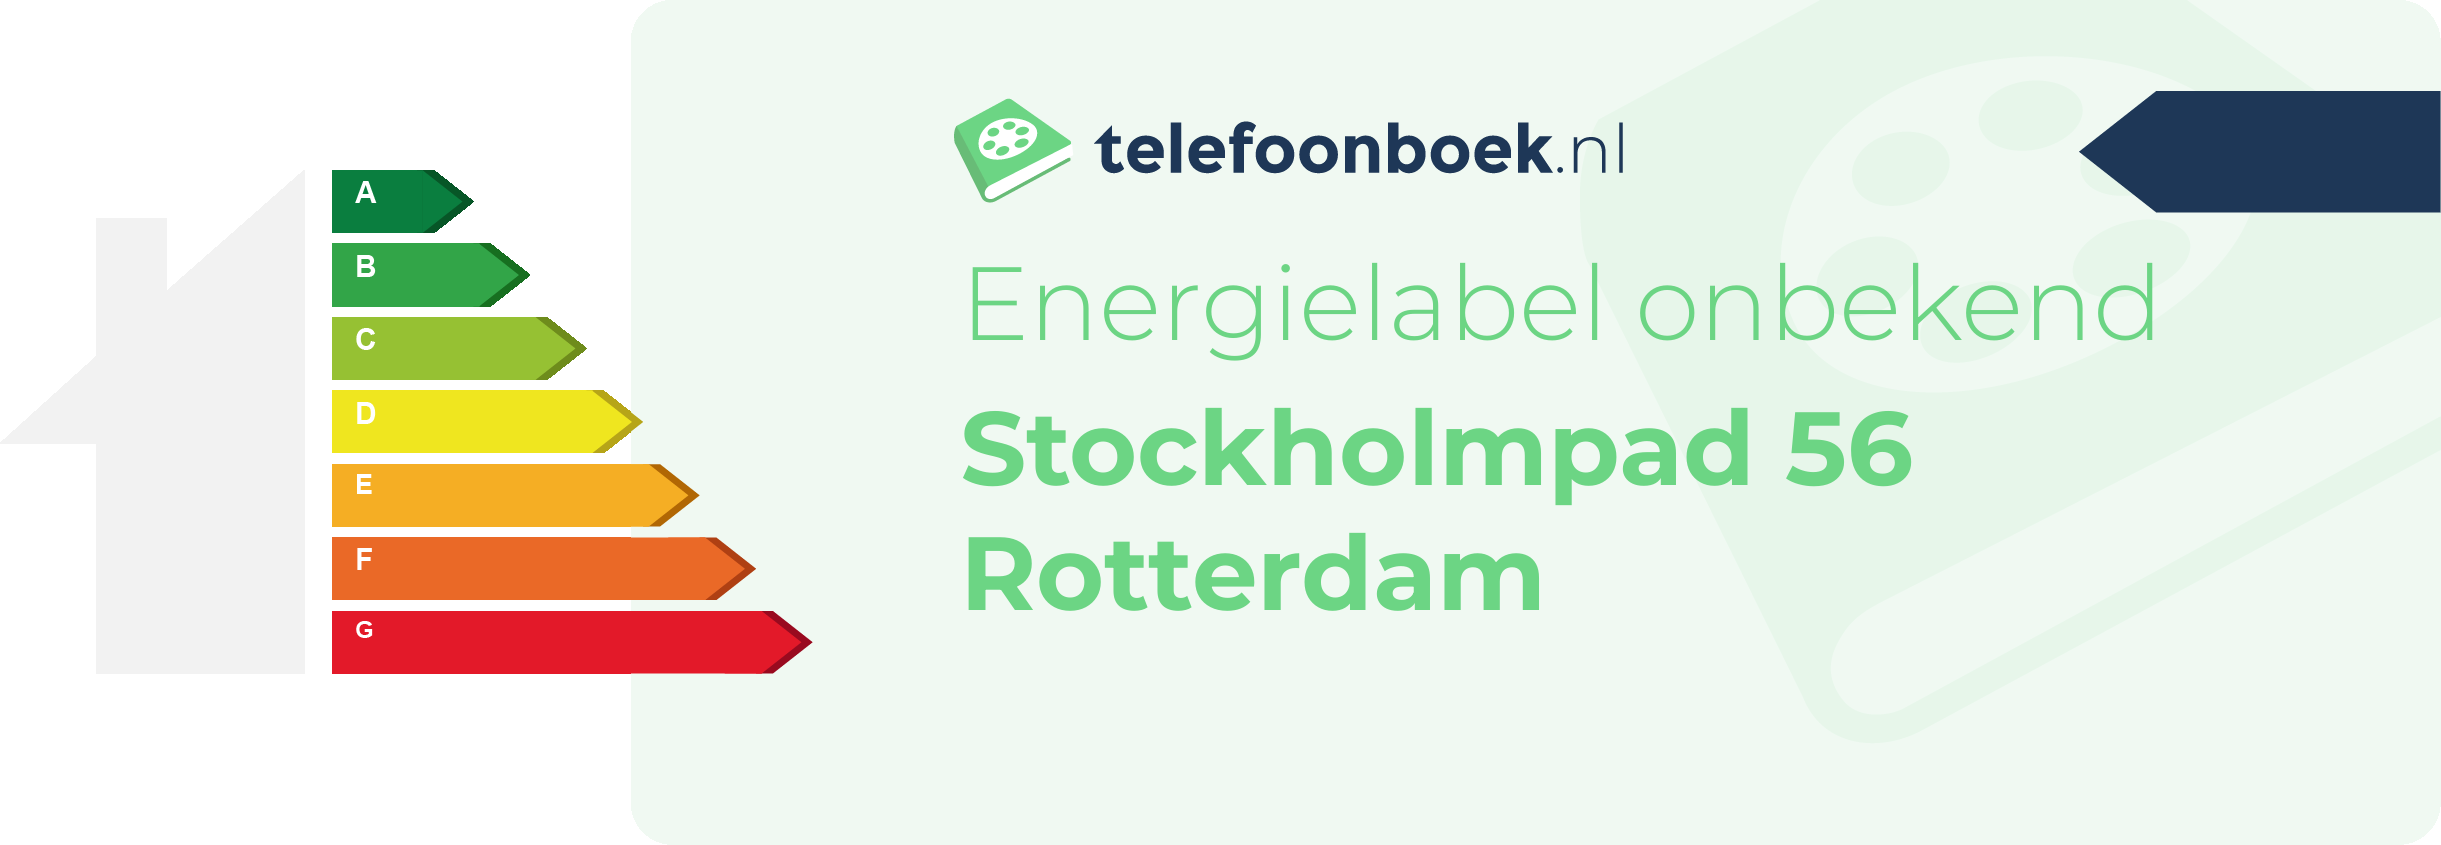 Energielabel Stockholmpad 56 Rotterdam